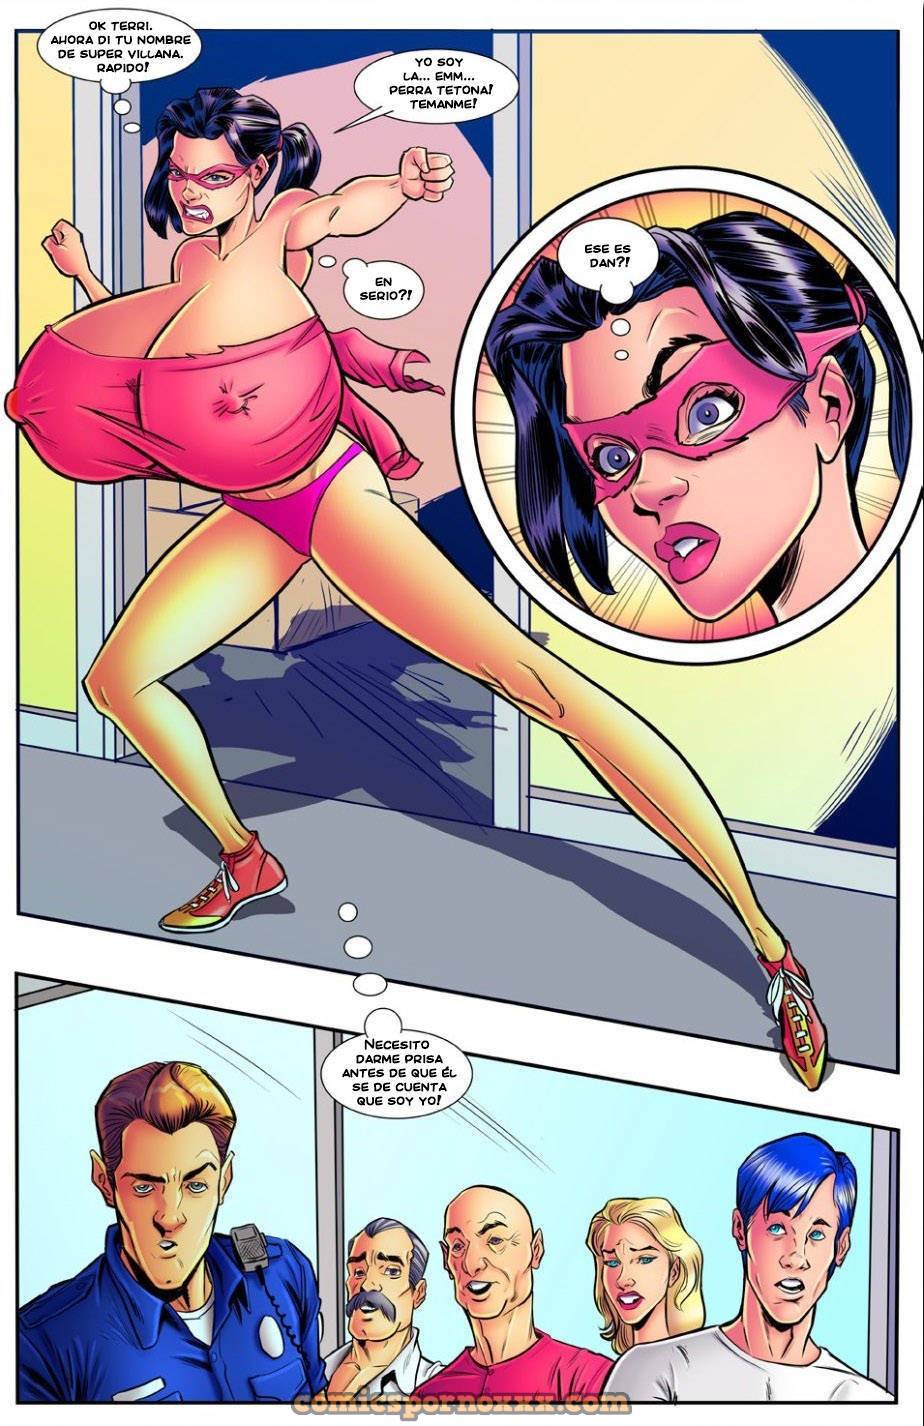 Super BEro: Rising #2 - 8 - Comics Porno - Hentai Manga - Cartoon XXX